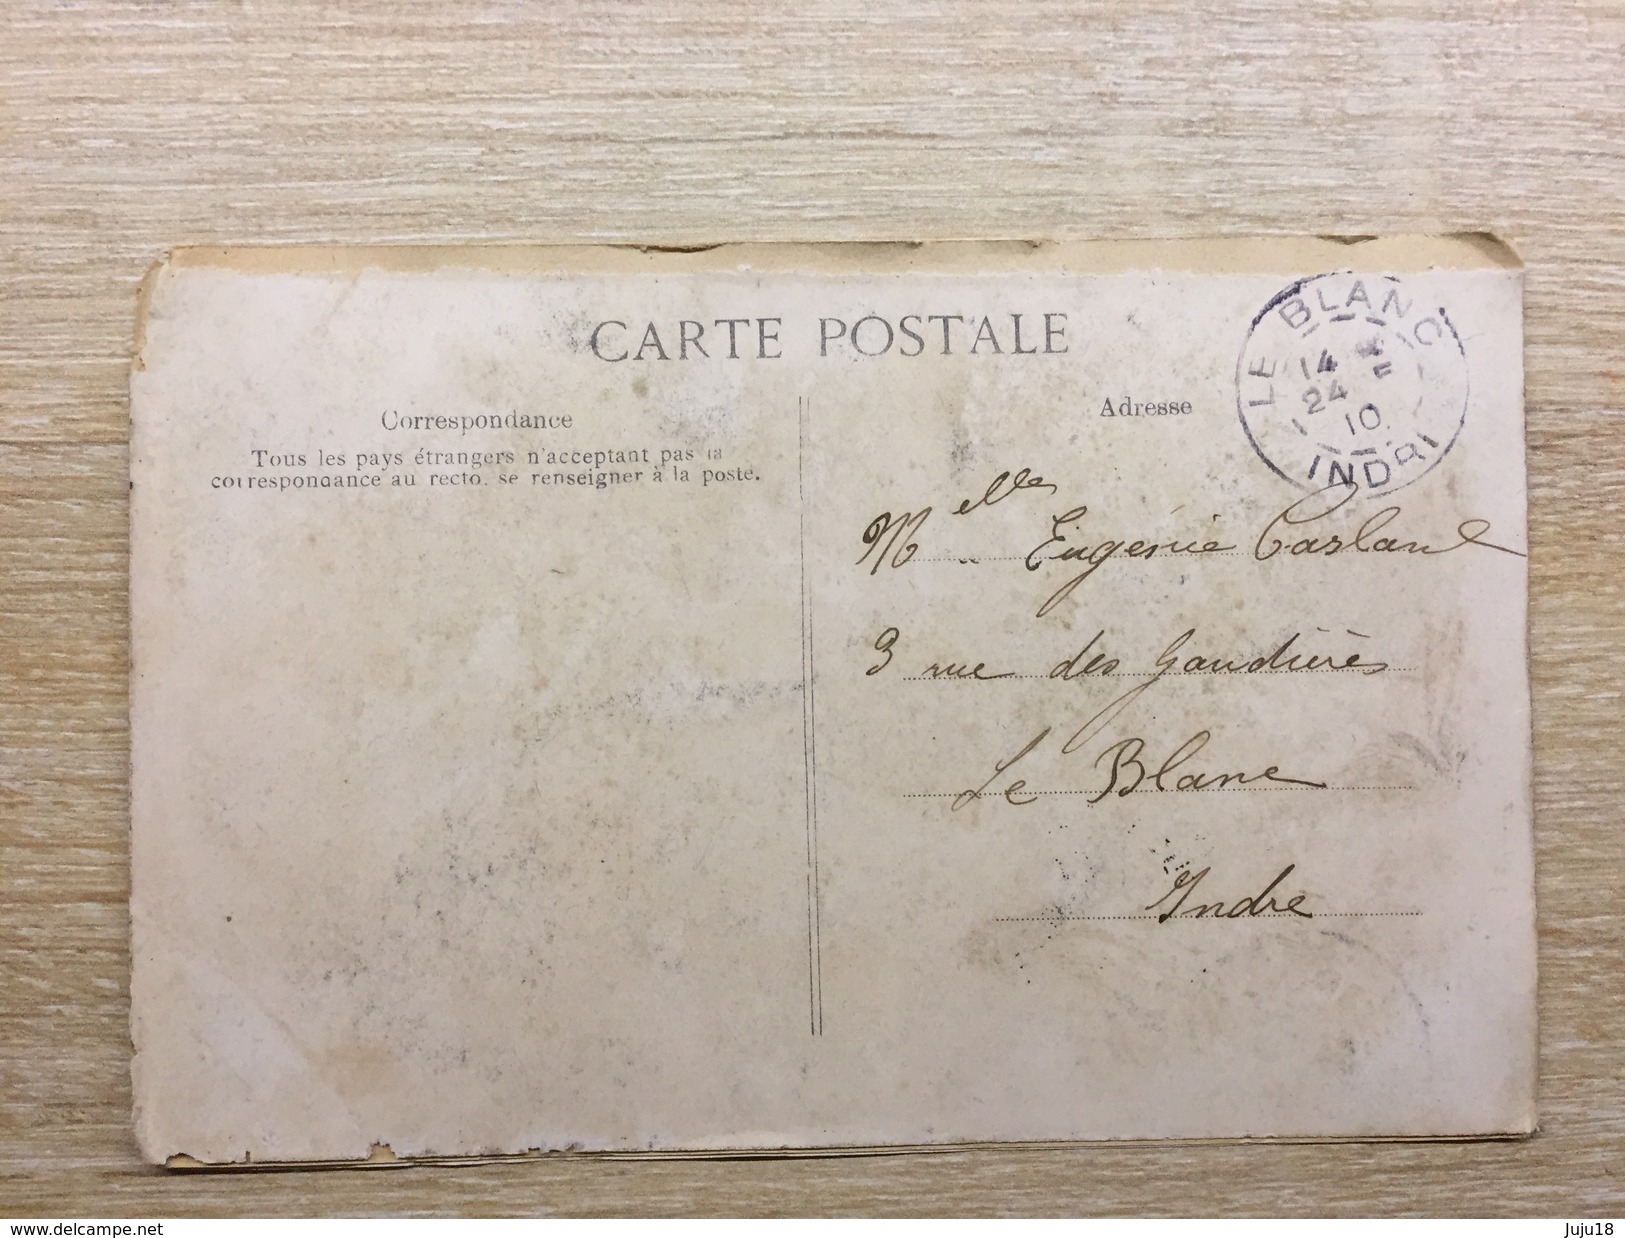 Carte Postale Fin Du Monde 1910 - Humor